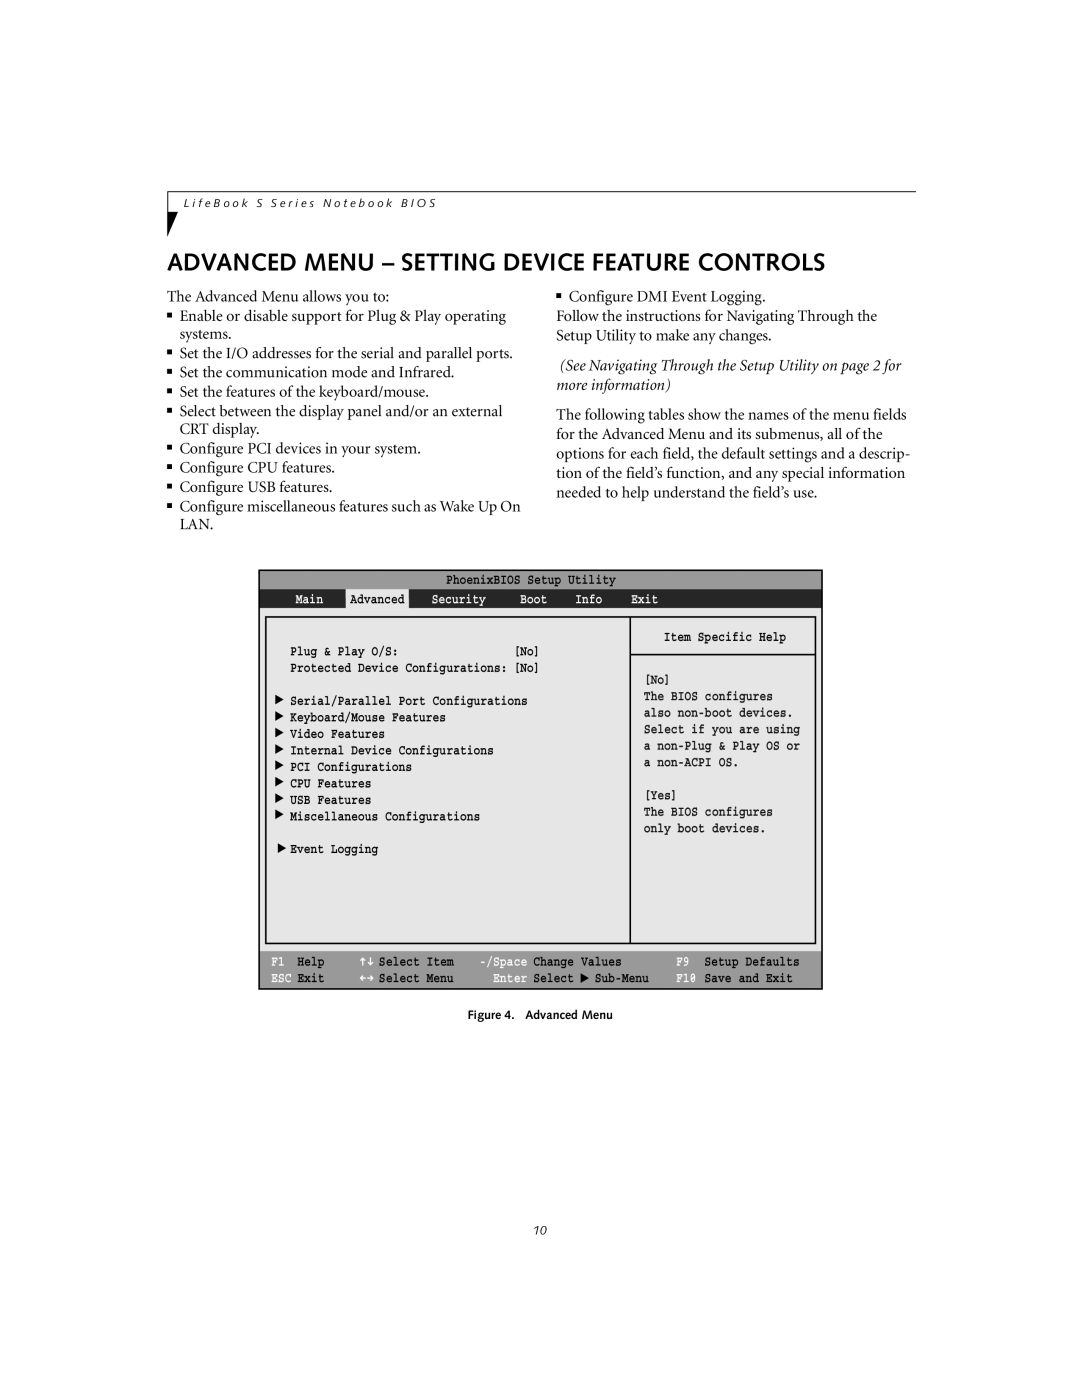 Fujitsu S6110 manual Advanced Menu - Setting Device Feature Controls 